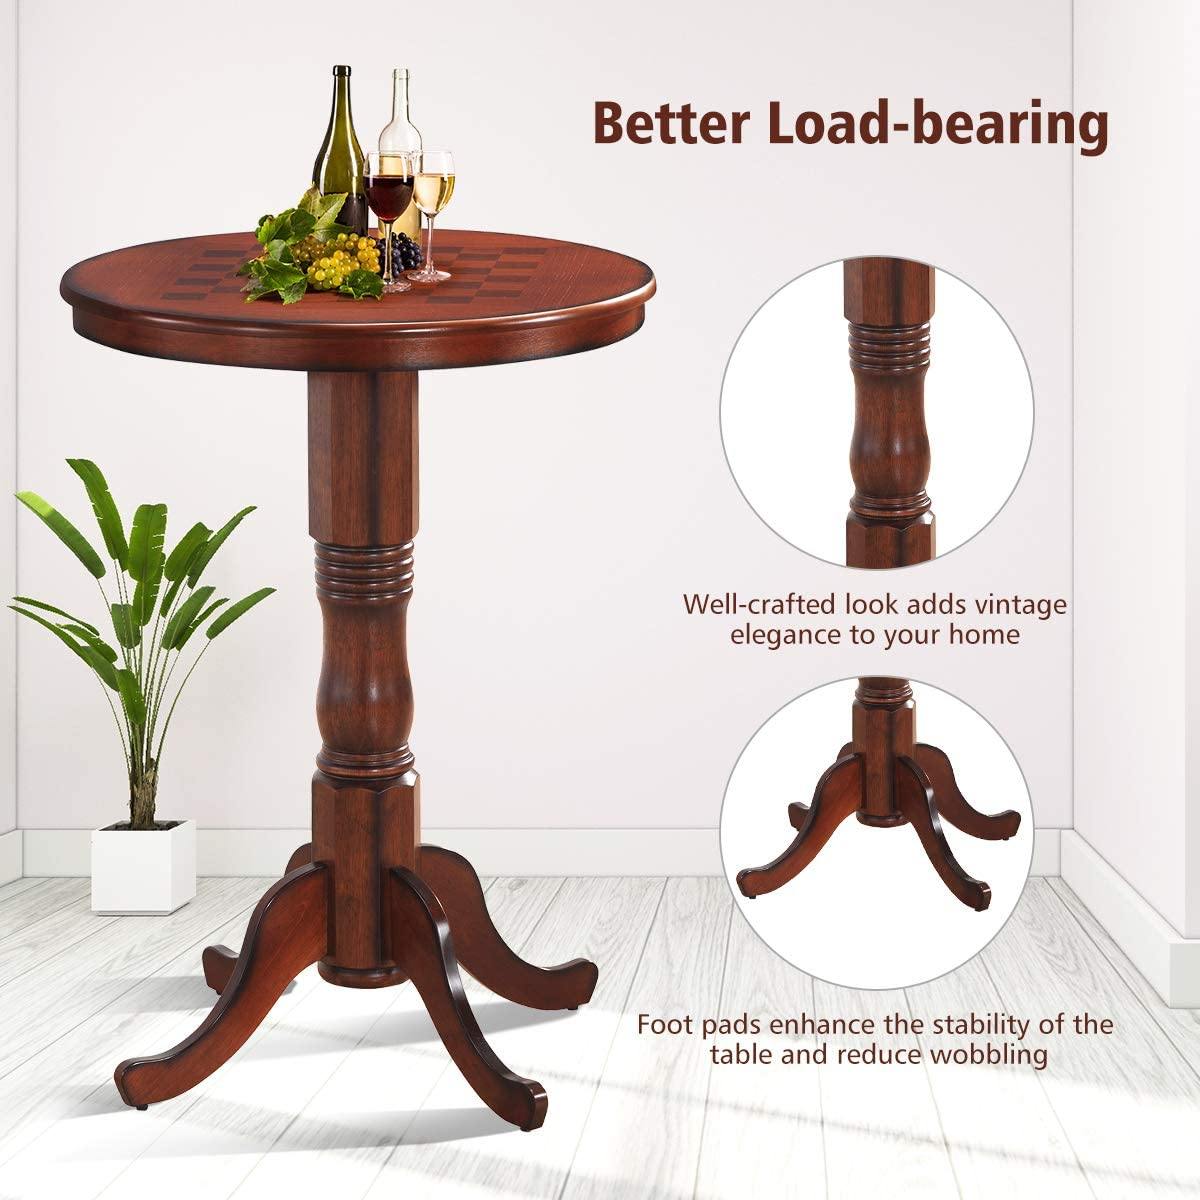 Table 42" Wooden Round Pub Pedestal Side Table - Giantexus